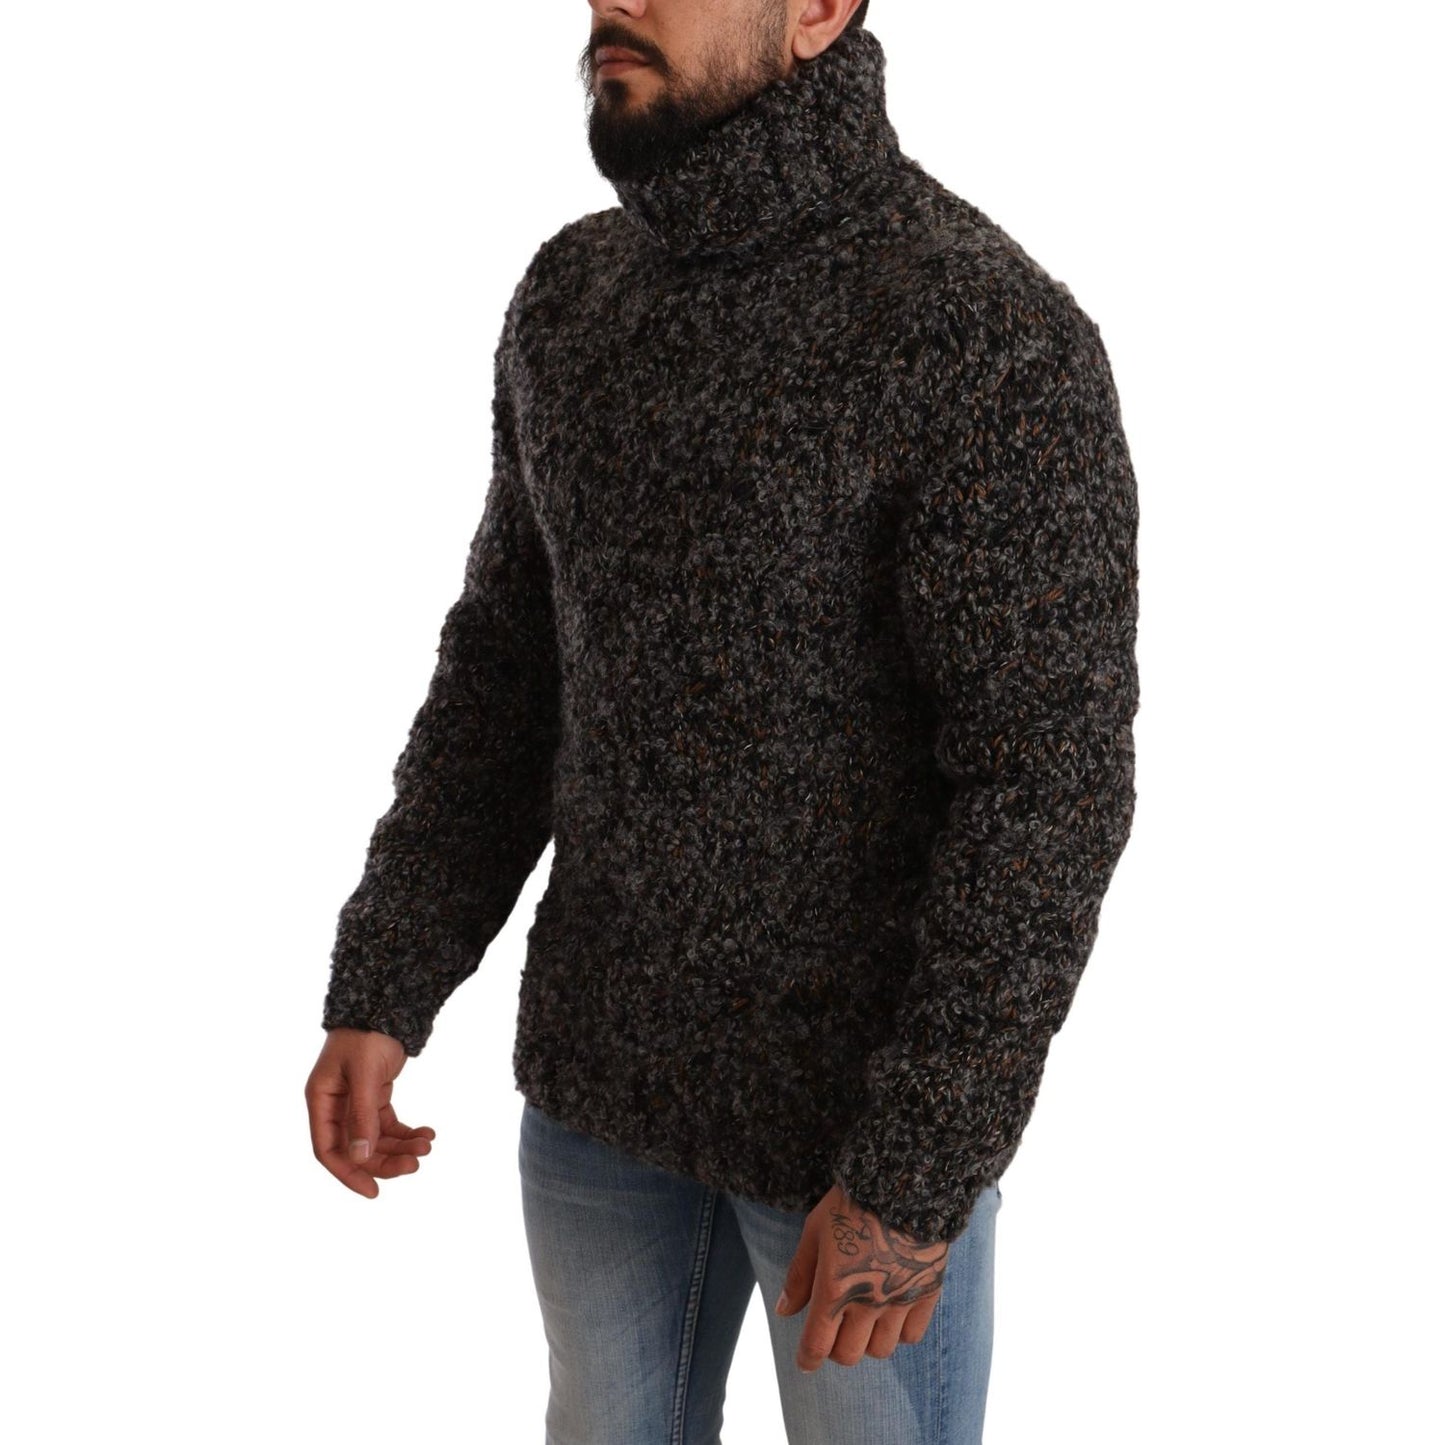 Dolce & Gabbana Elegant Speckled Turtleneck Wool-Blend Sweater MAN SWEATERS gray-wool-blend-turtleneck-pullover-sweater IMG_4848-scaled-c6f31384-595.jpg